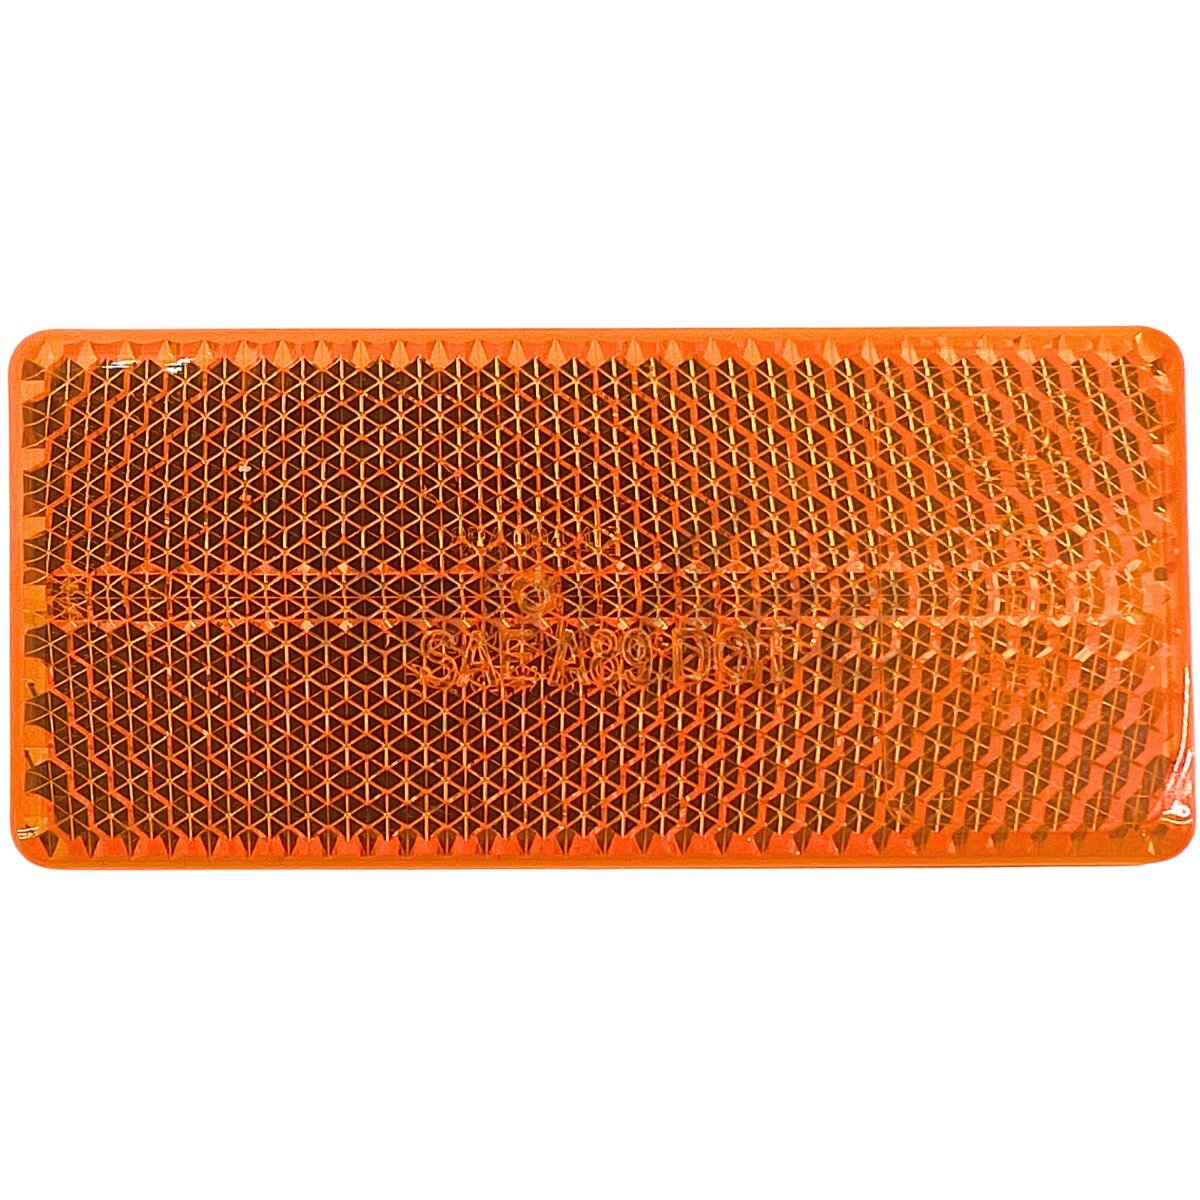 Reflektor 70x35mm, selbstklebend, Farbe: orange - italobee Shop, 3,57 €